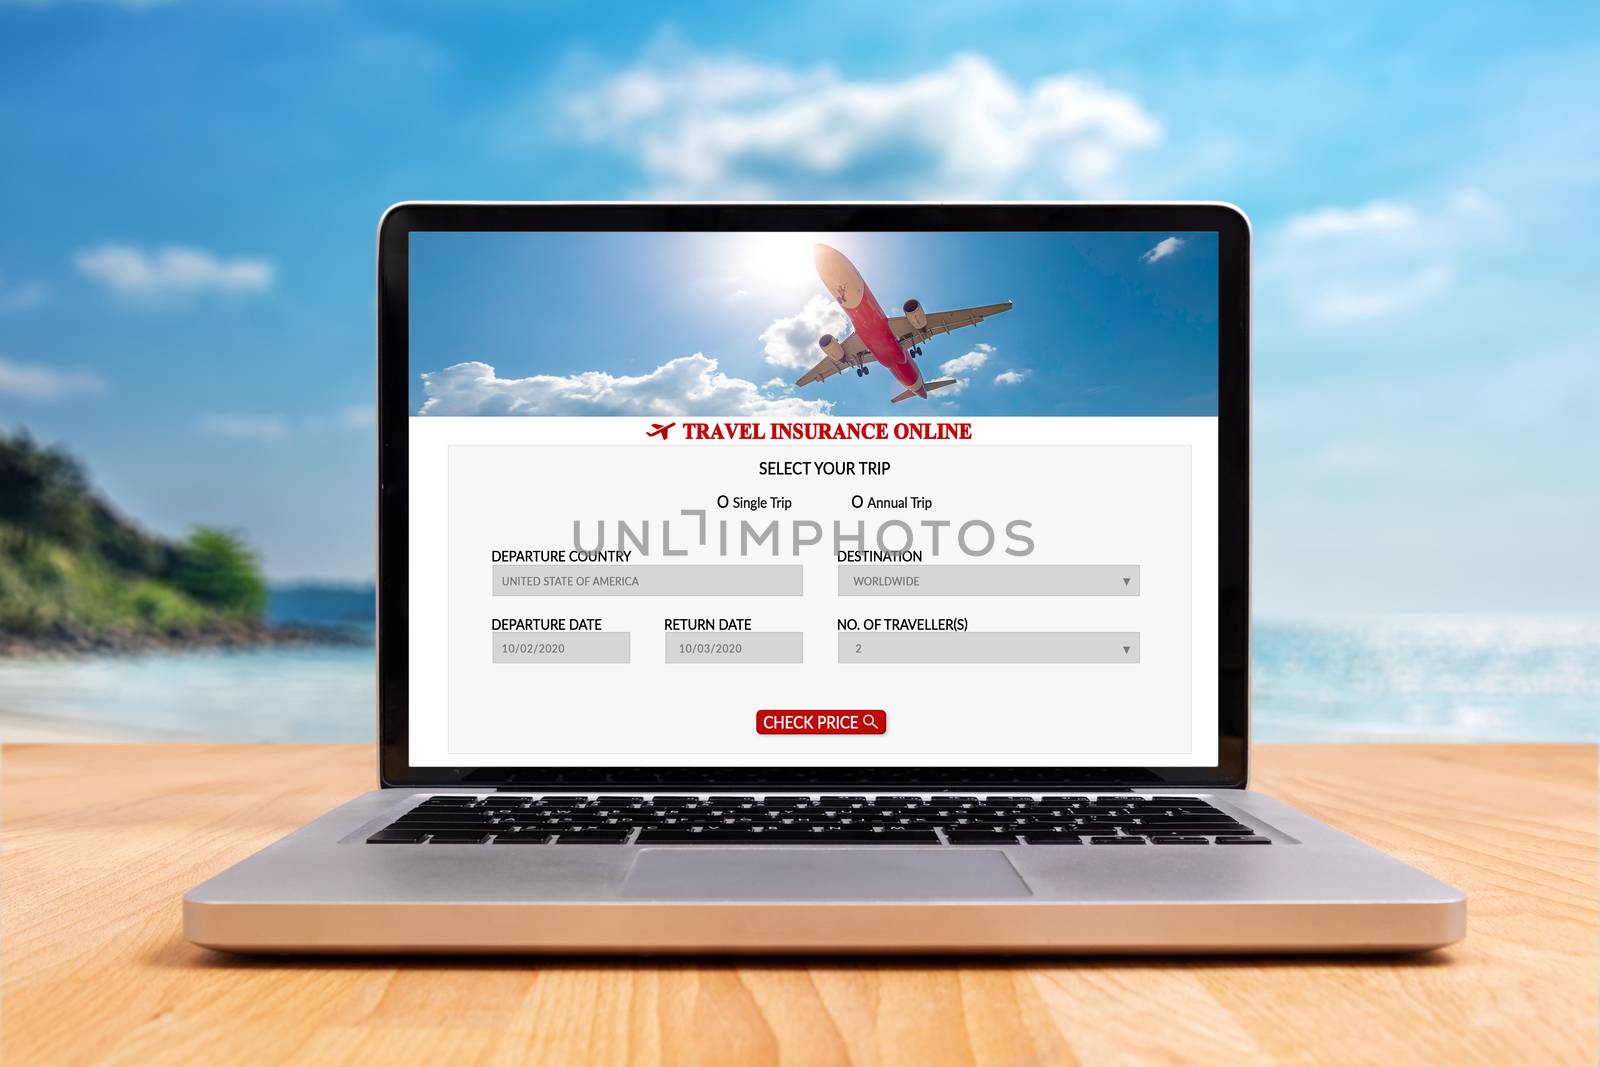 travel insurance online application website screen on laptop com by asiandelight